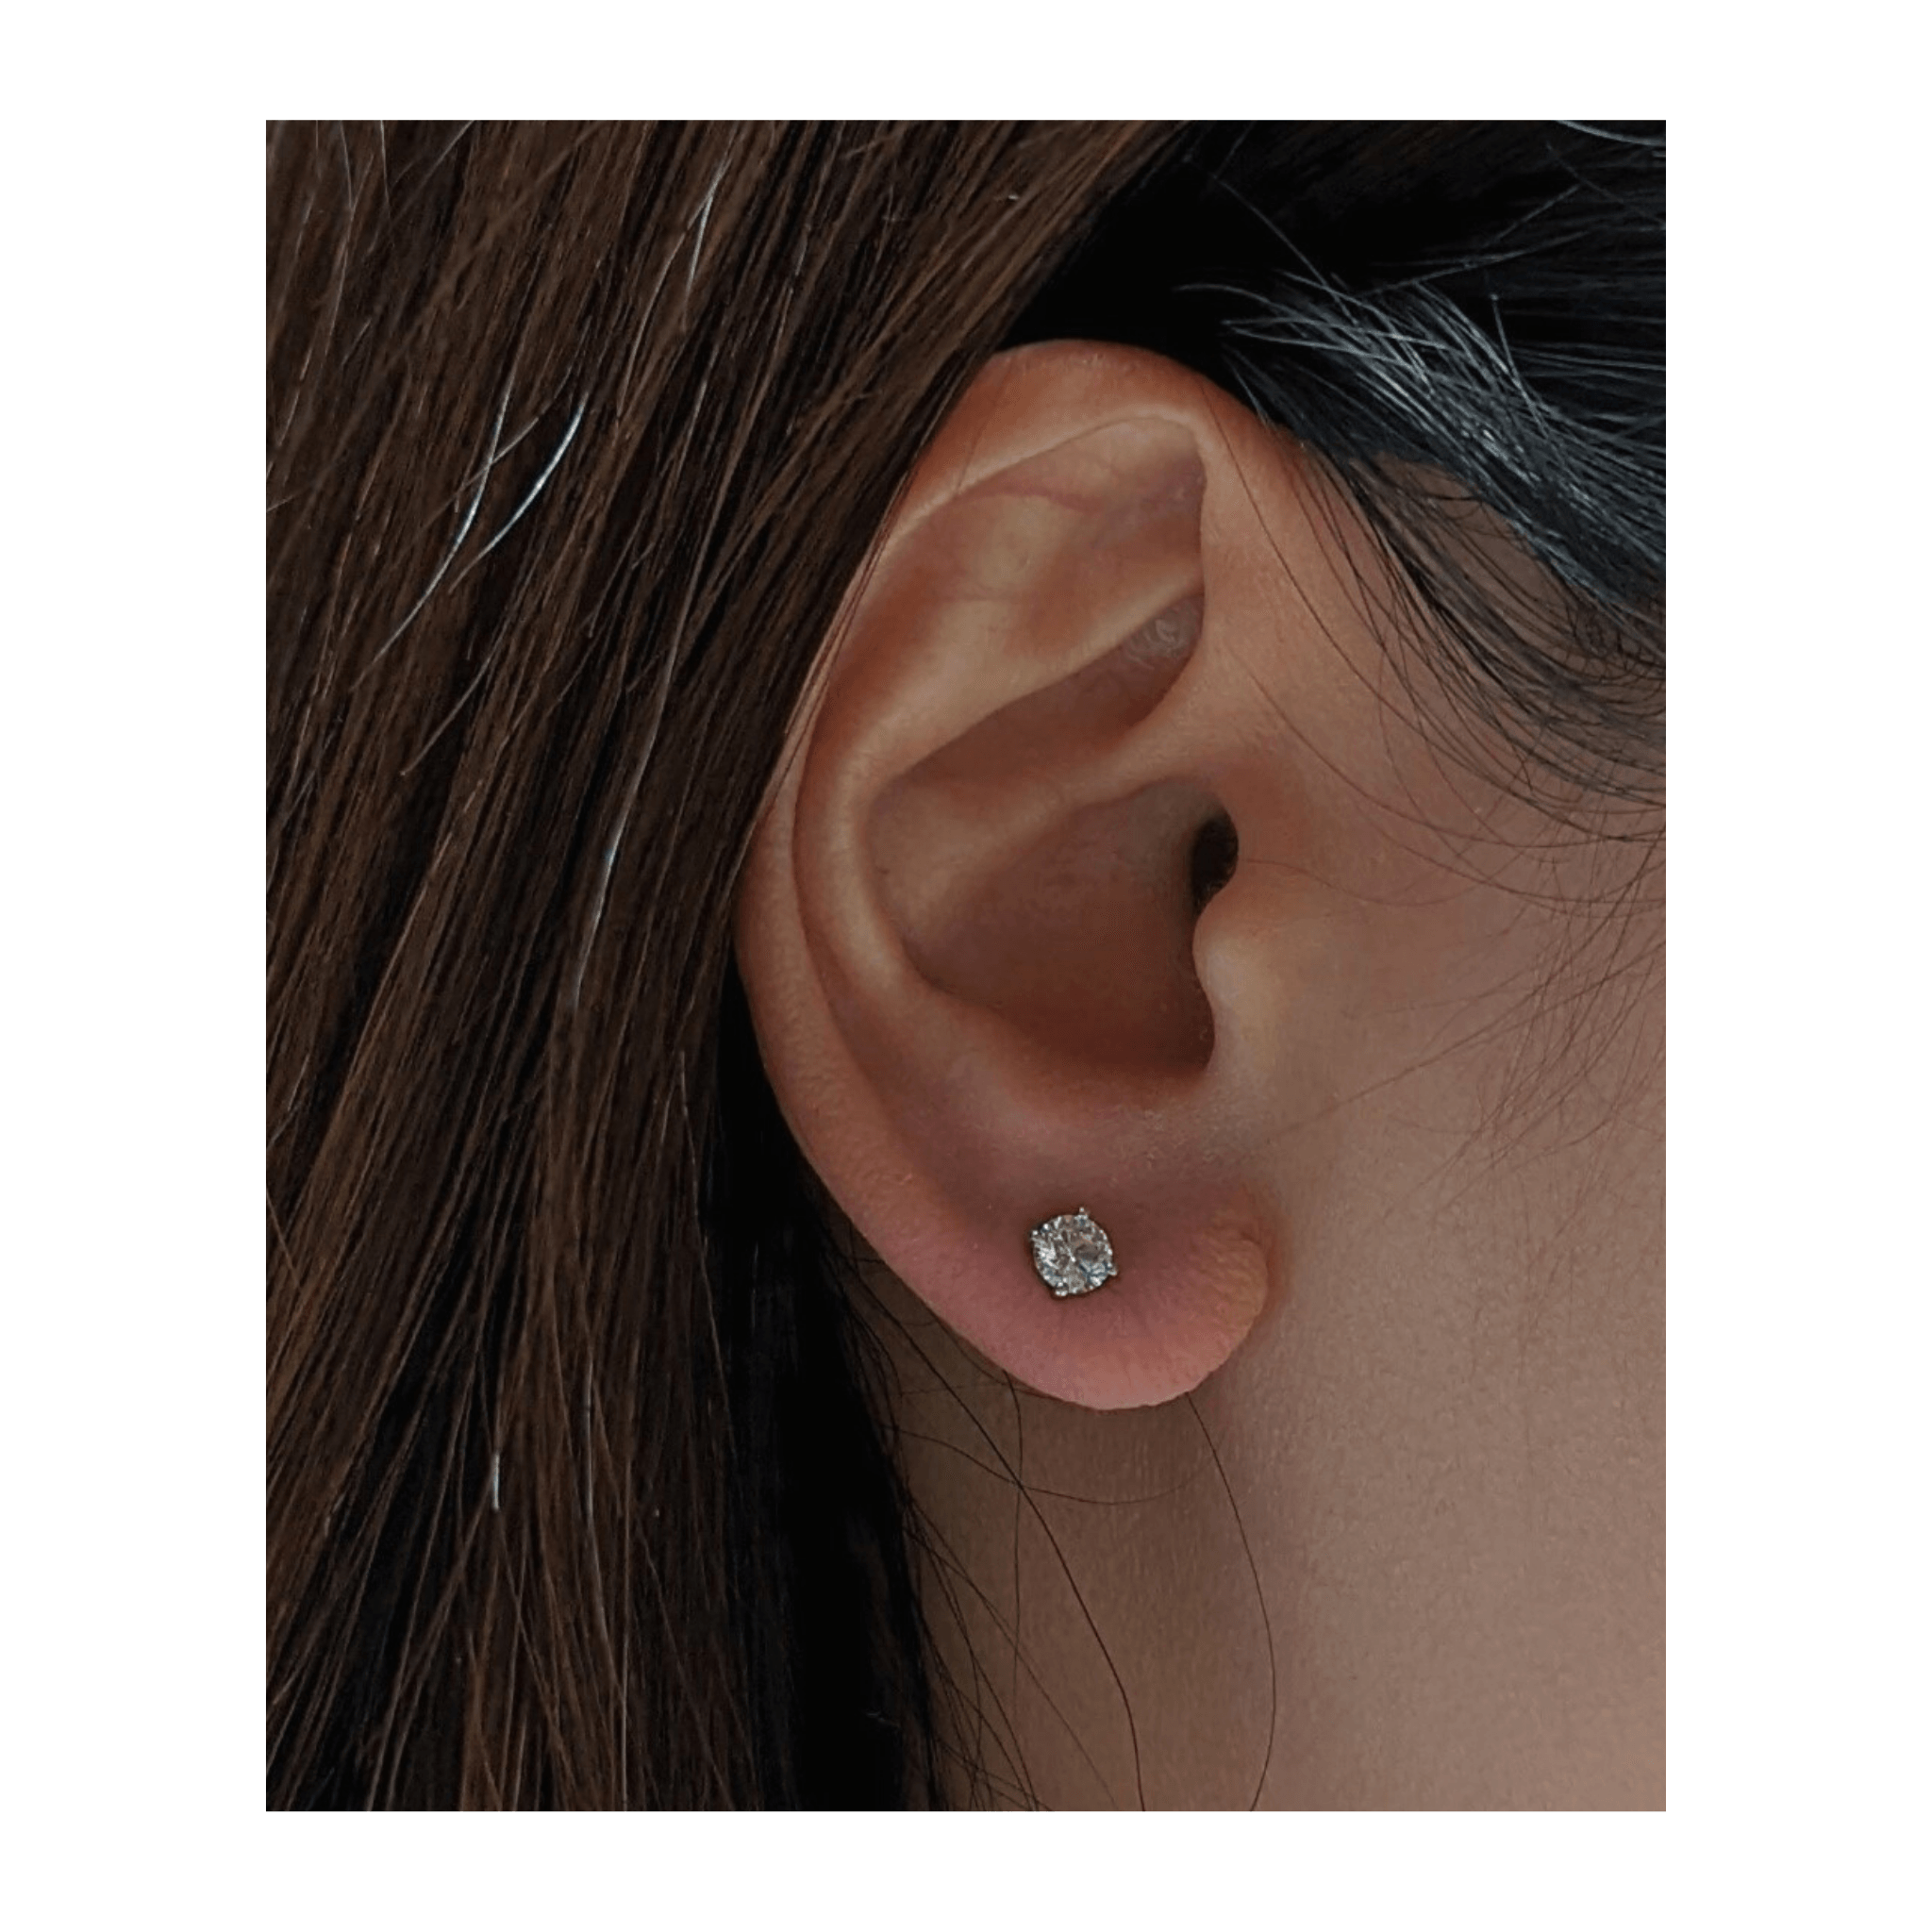 Update more than 213 80 carat diamond earrings latest